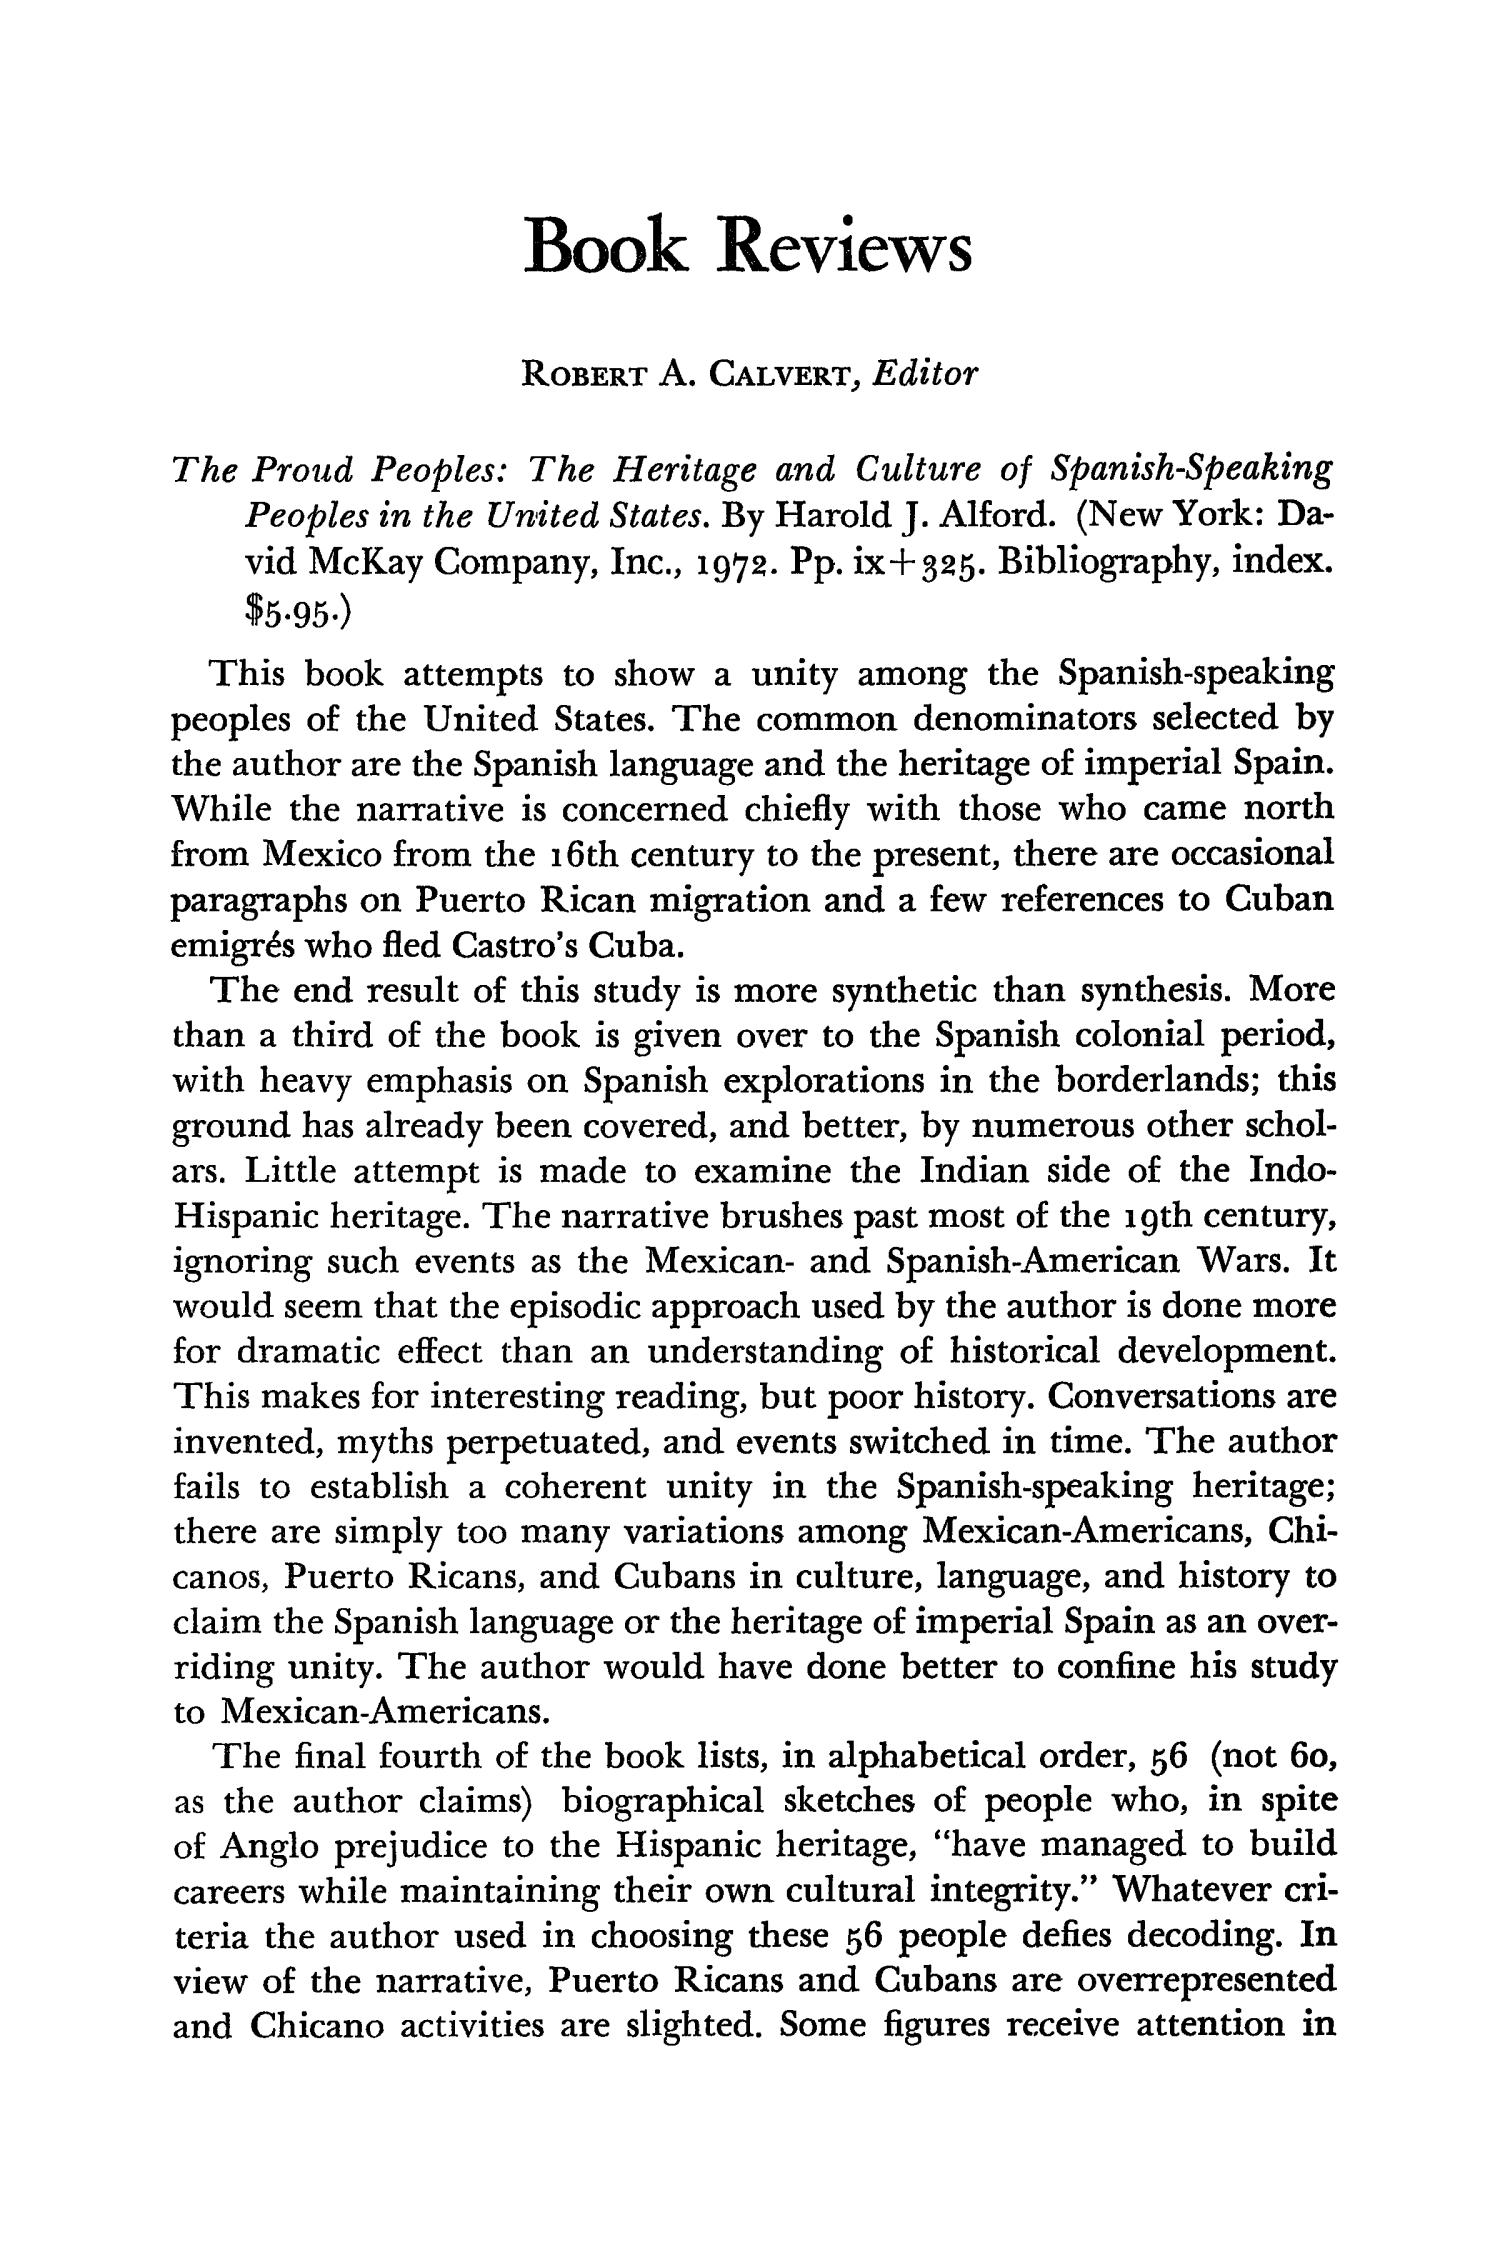 The Southwestern Historical Quarterly, Volume 76, July 1972 - April, 1973
                                                
                                                    337
                                                